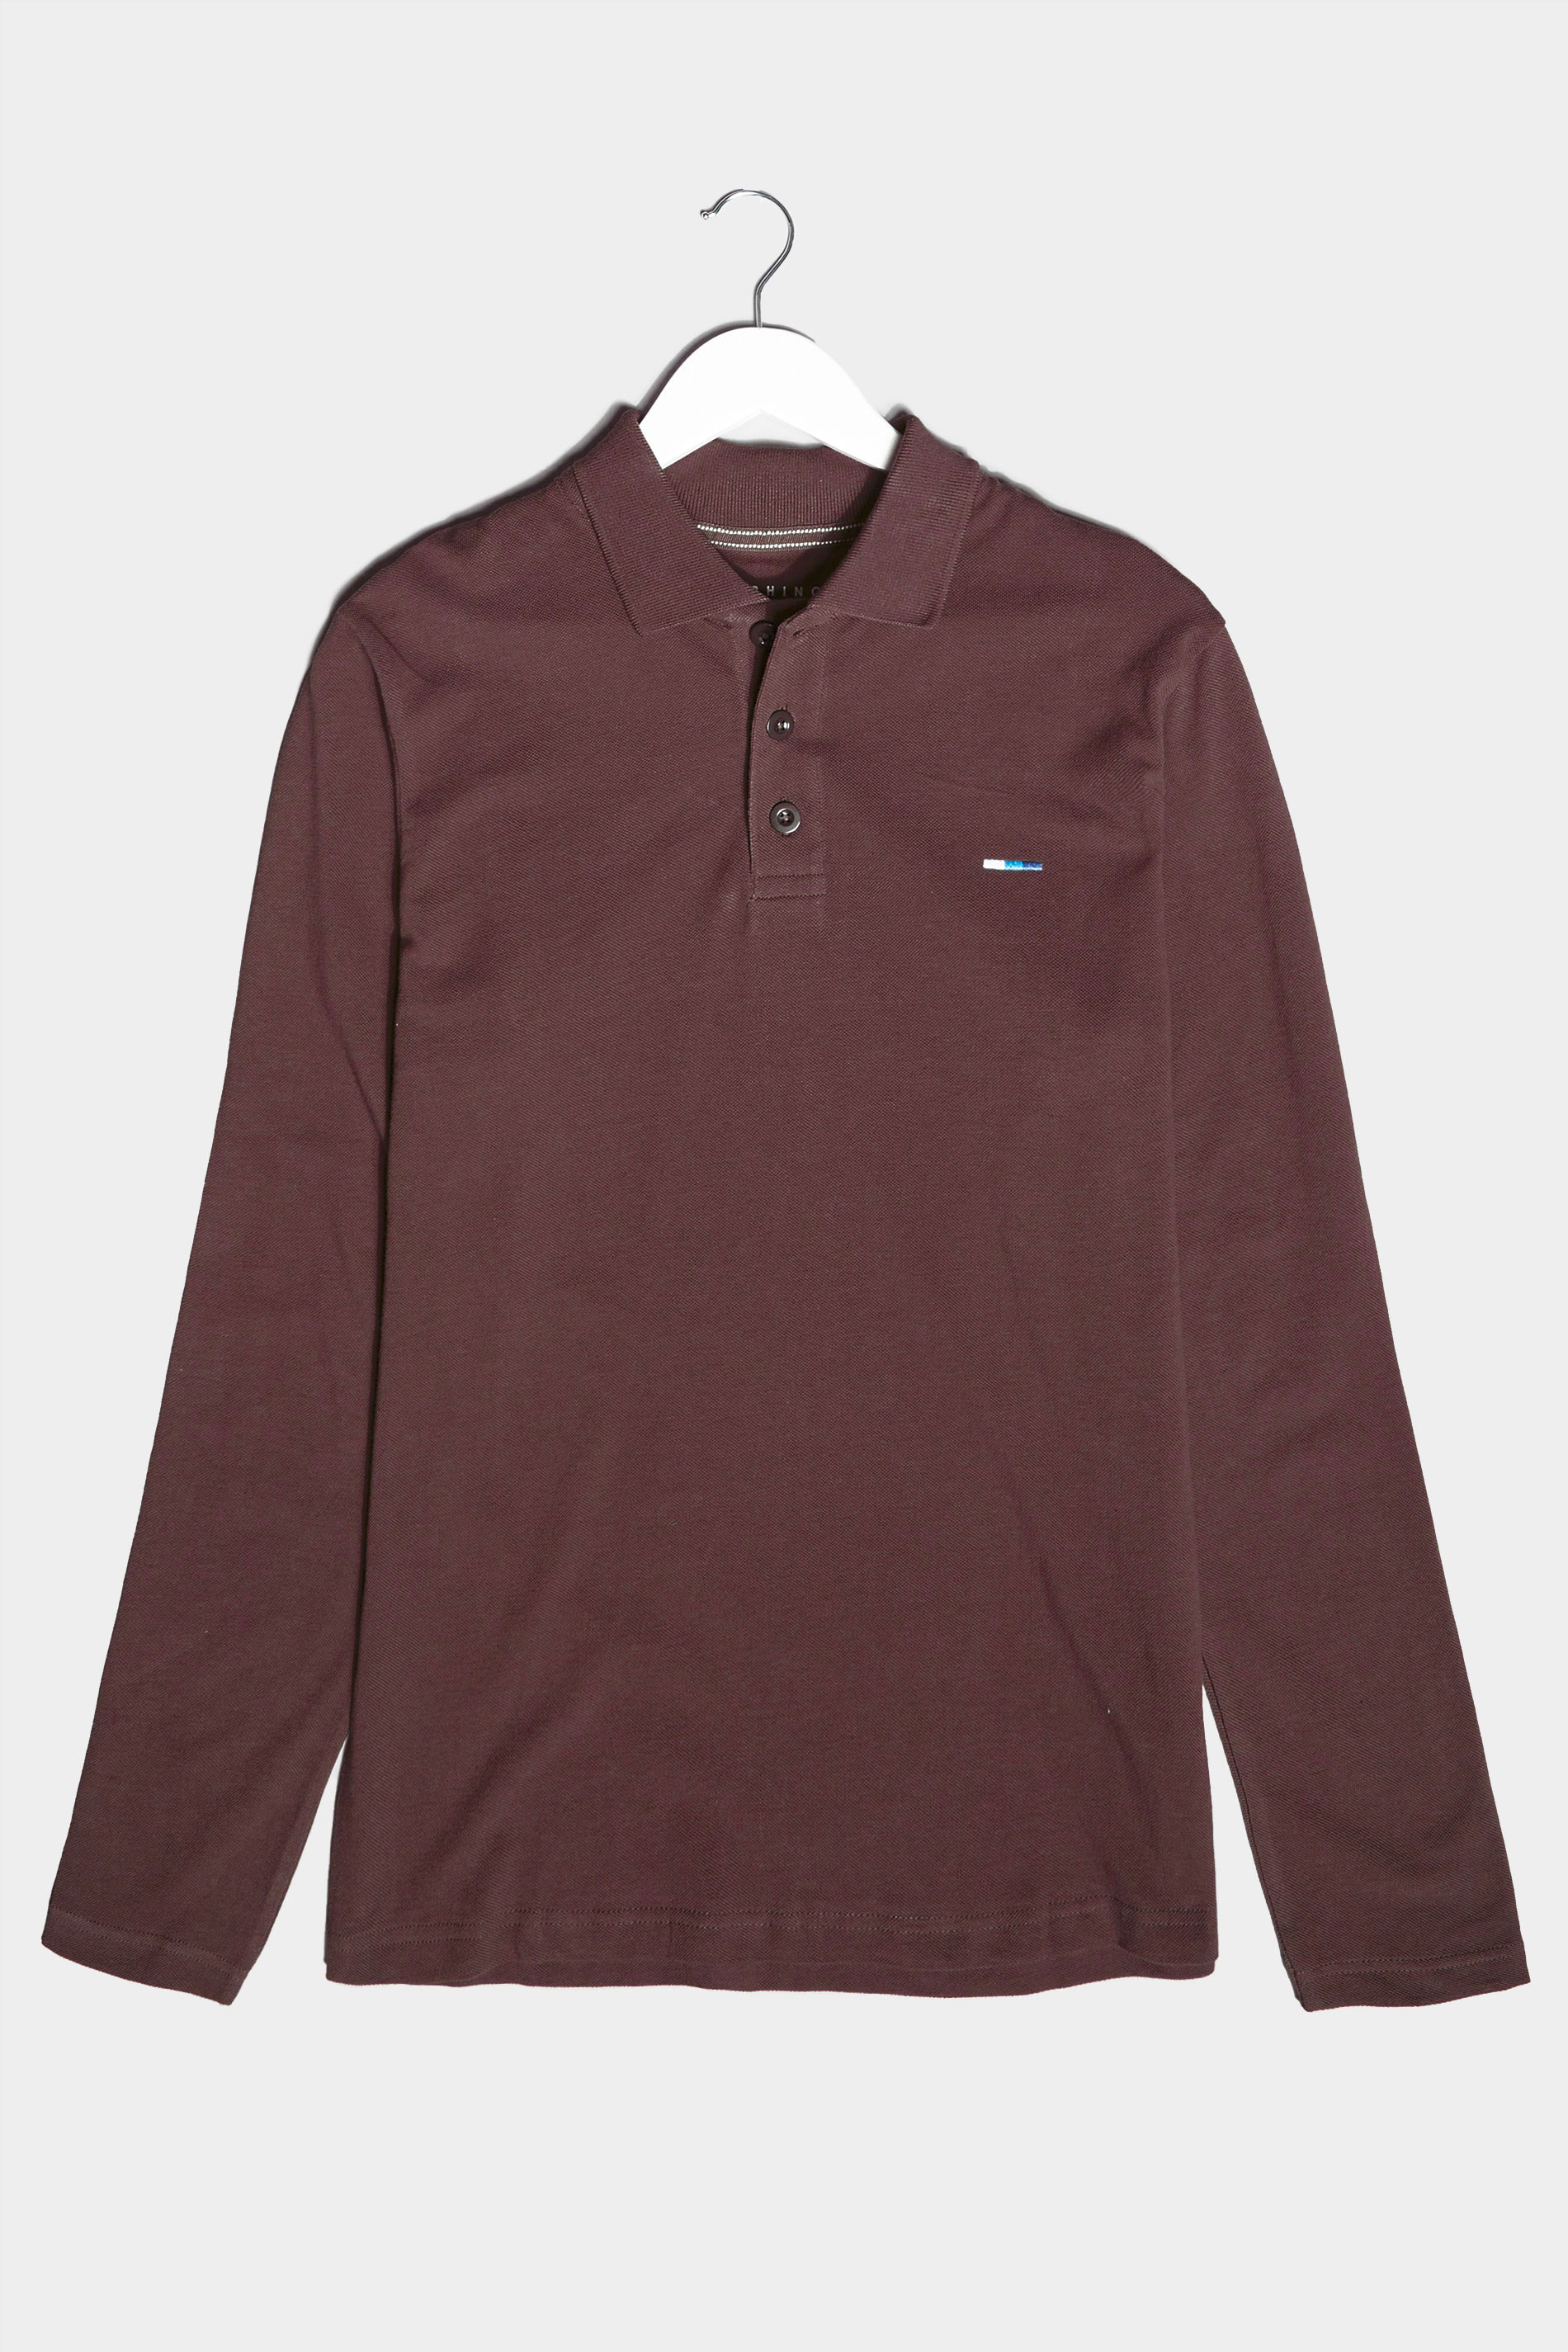 BadRhino Burgundy Essential Long Sleeve Polo Shirt | BadRhino